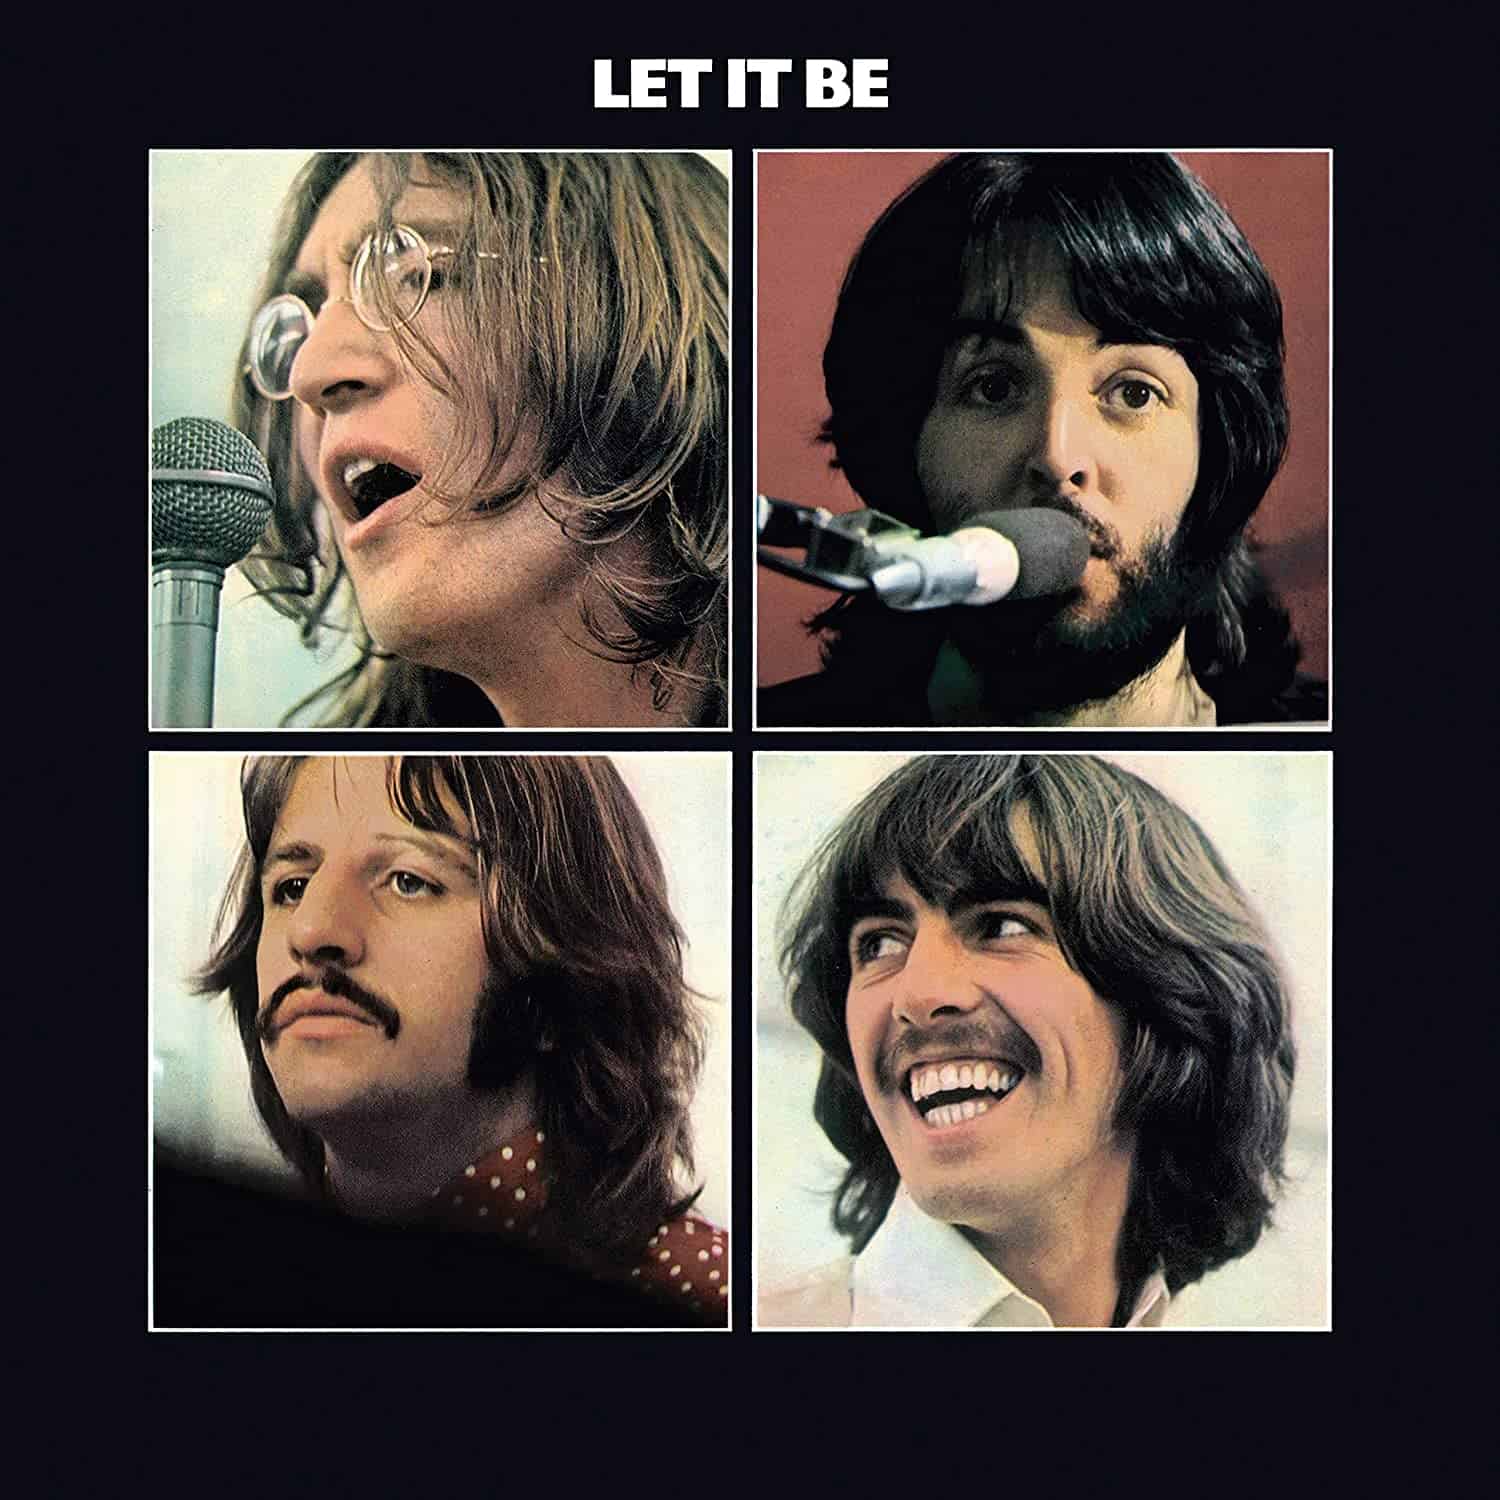 Beatles-Let-It-Be-vinyl-record-album-front-cover